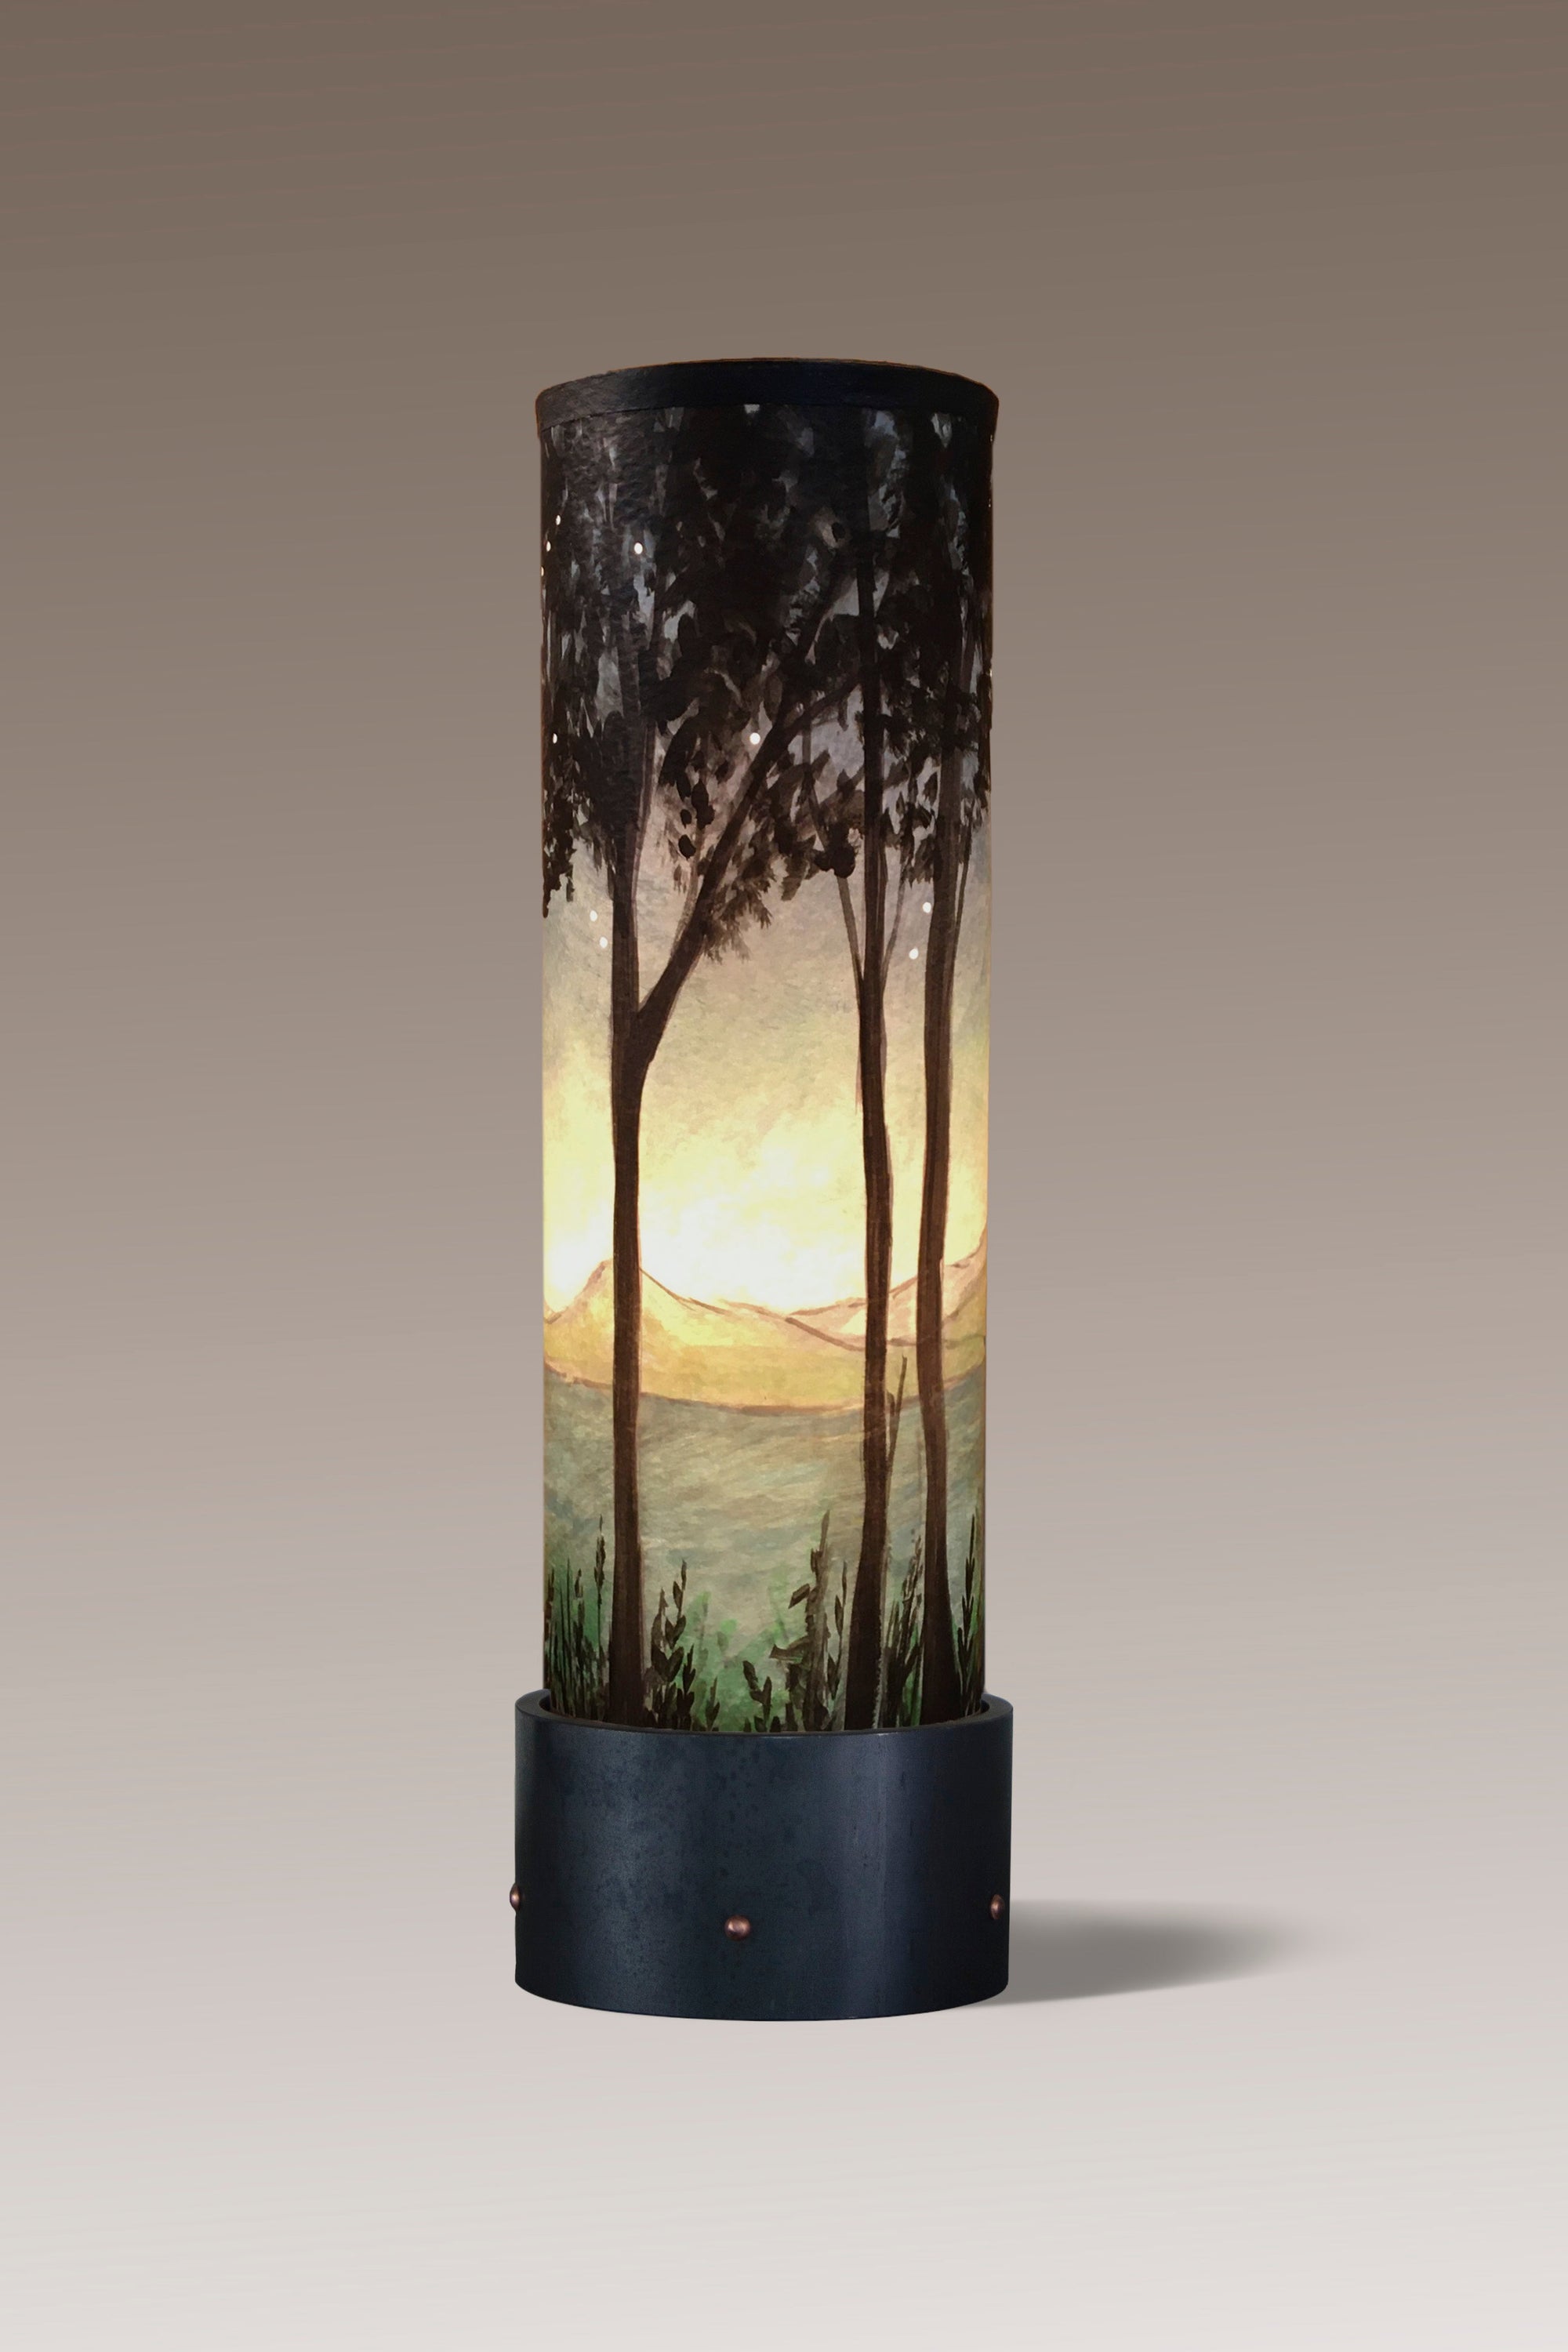 Janna Ugone & Co Luminaires Steel Luminaire Accent Lamp with Twilight Shade